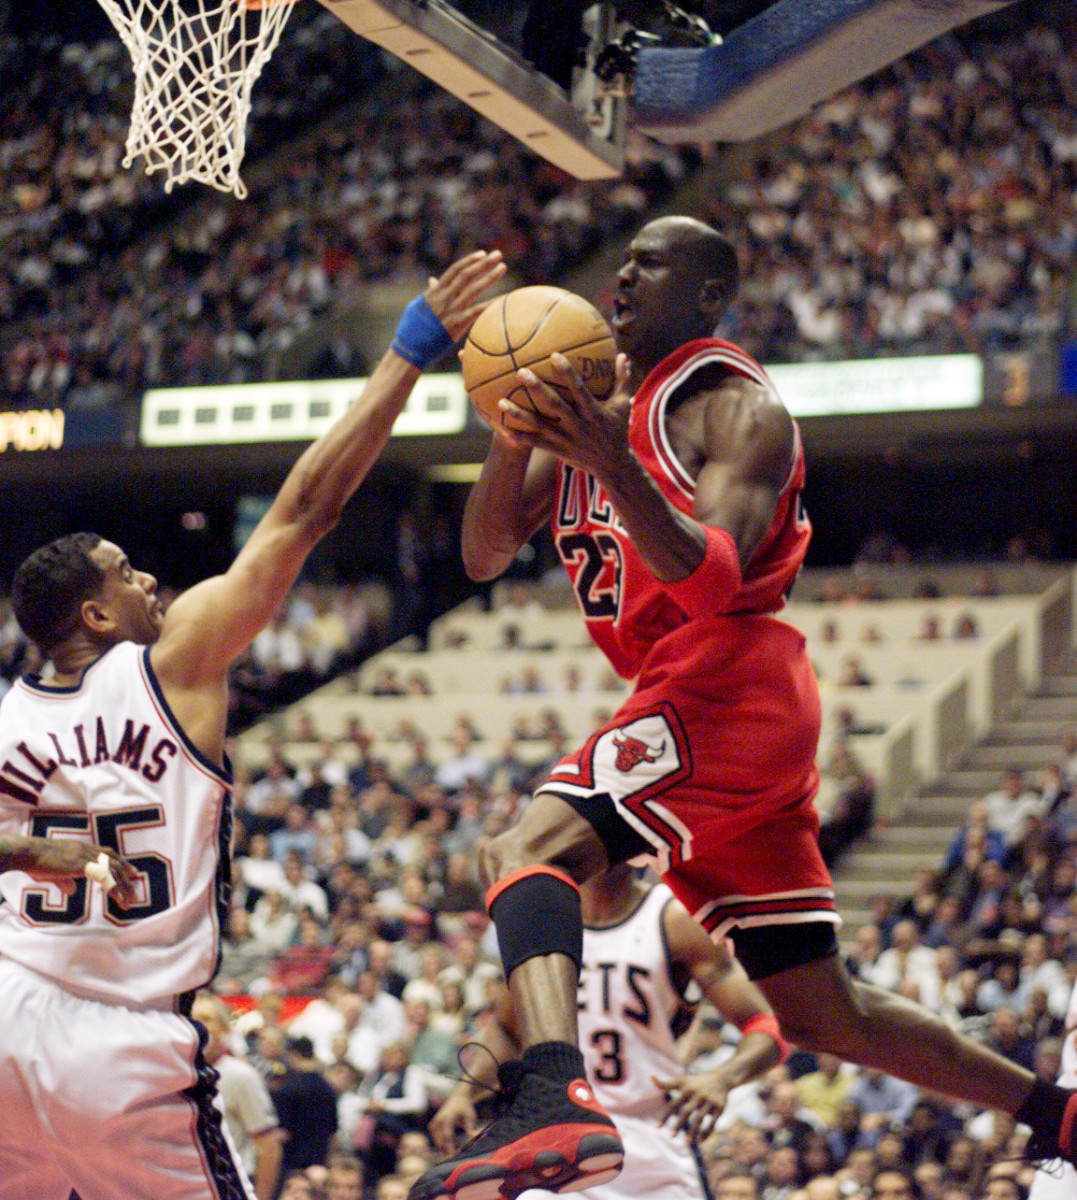 NBA Fans React To Michael Jordan’s Insane Hang-Time And Aerial Control: “He Flies Through The Air"